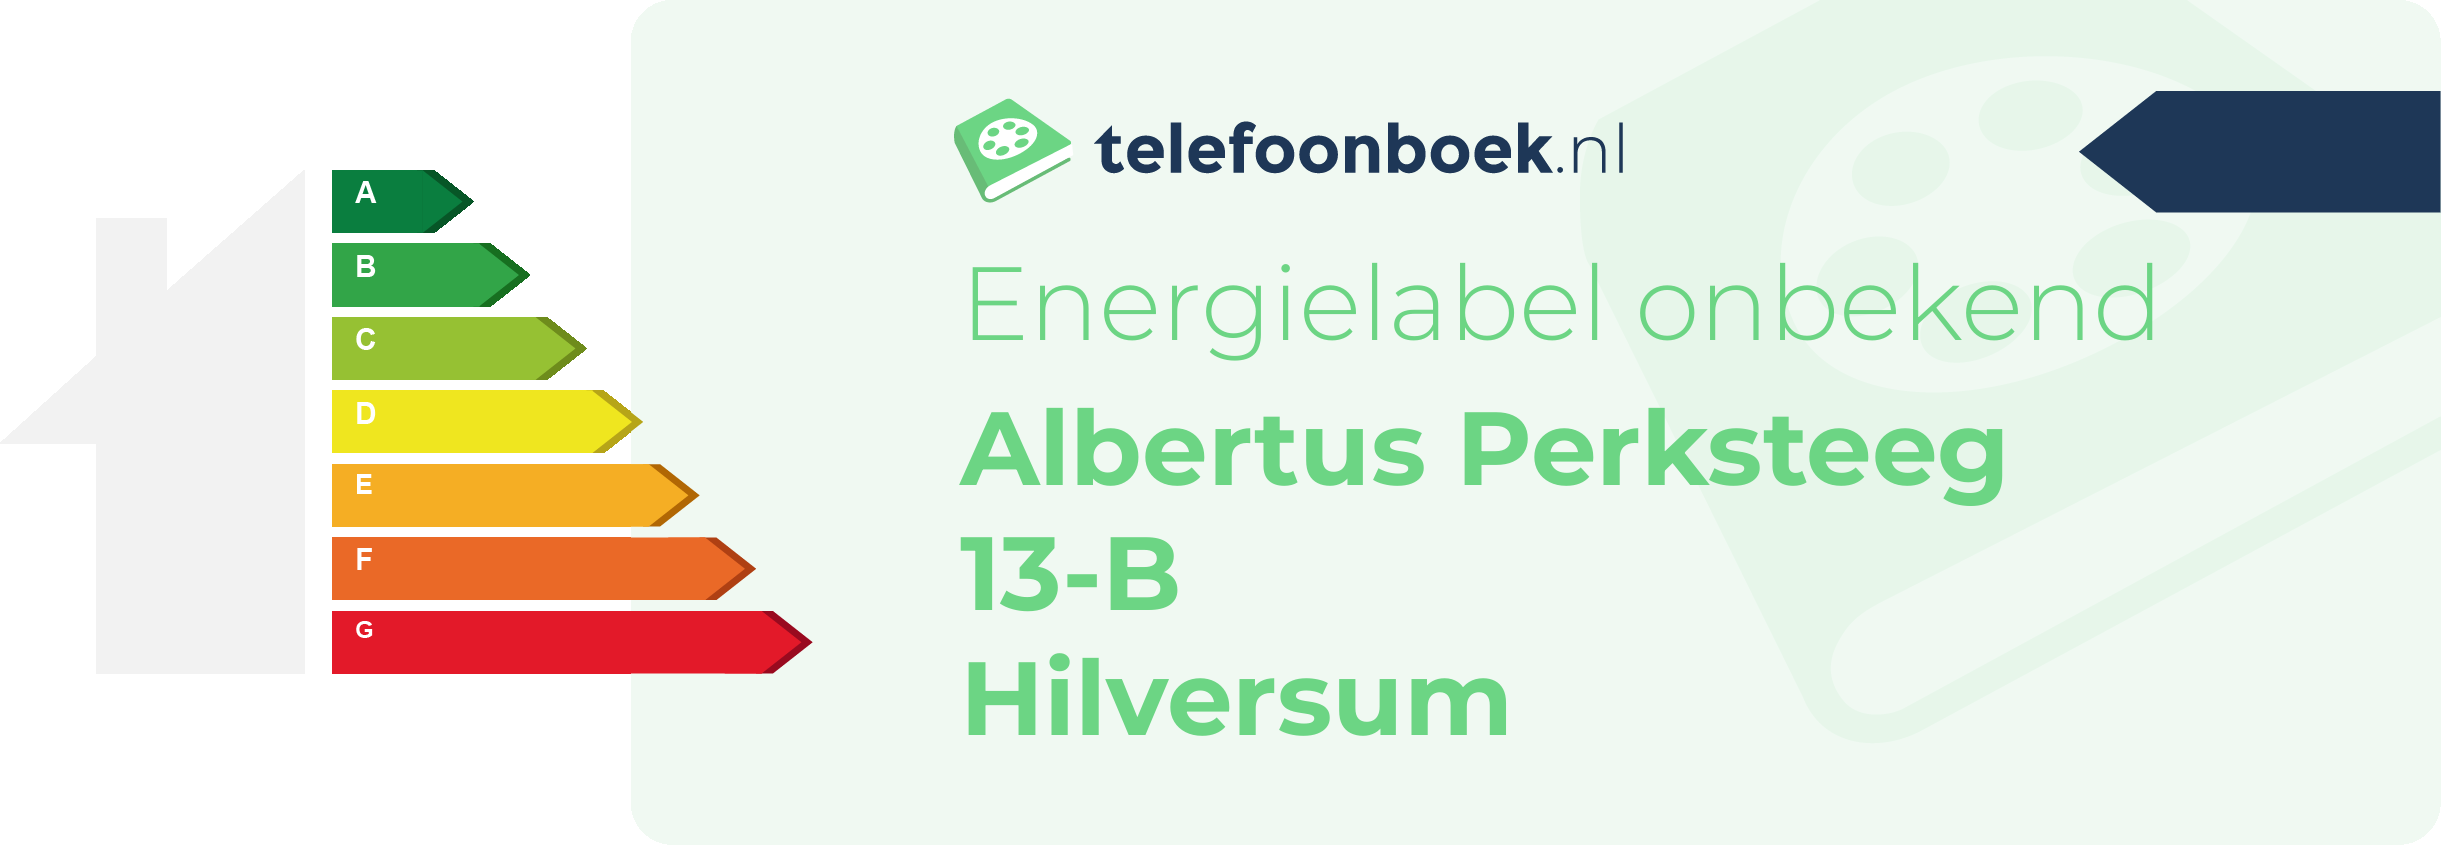 Energielabel Albertus Perksteeg 13-B Hilversum